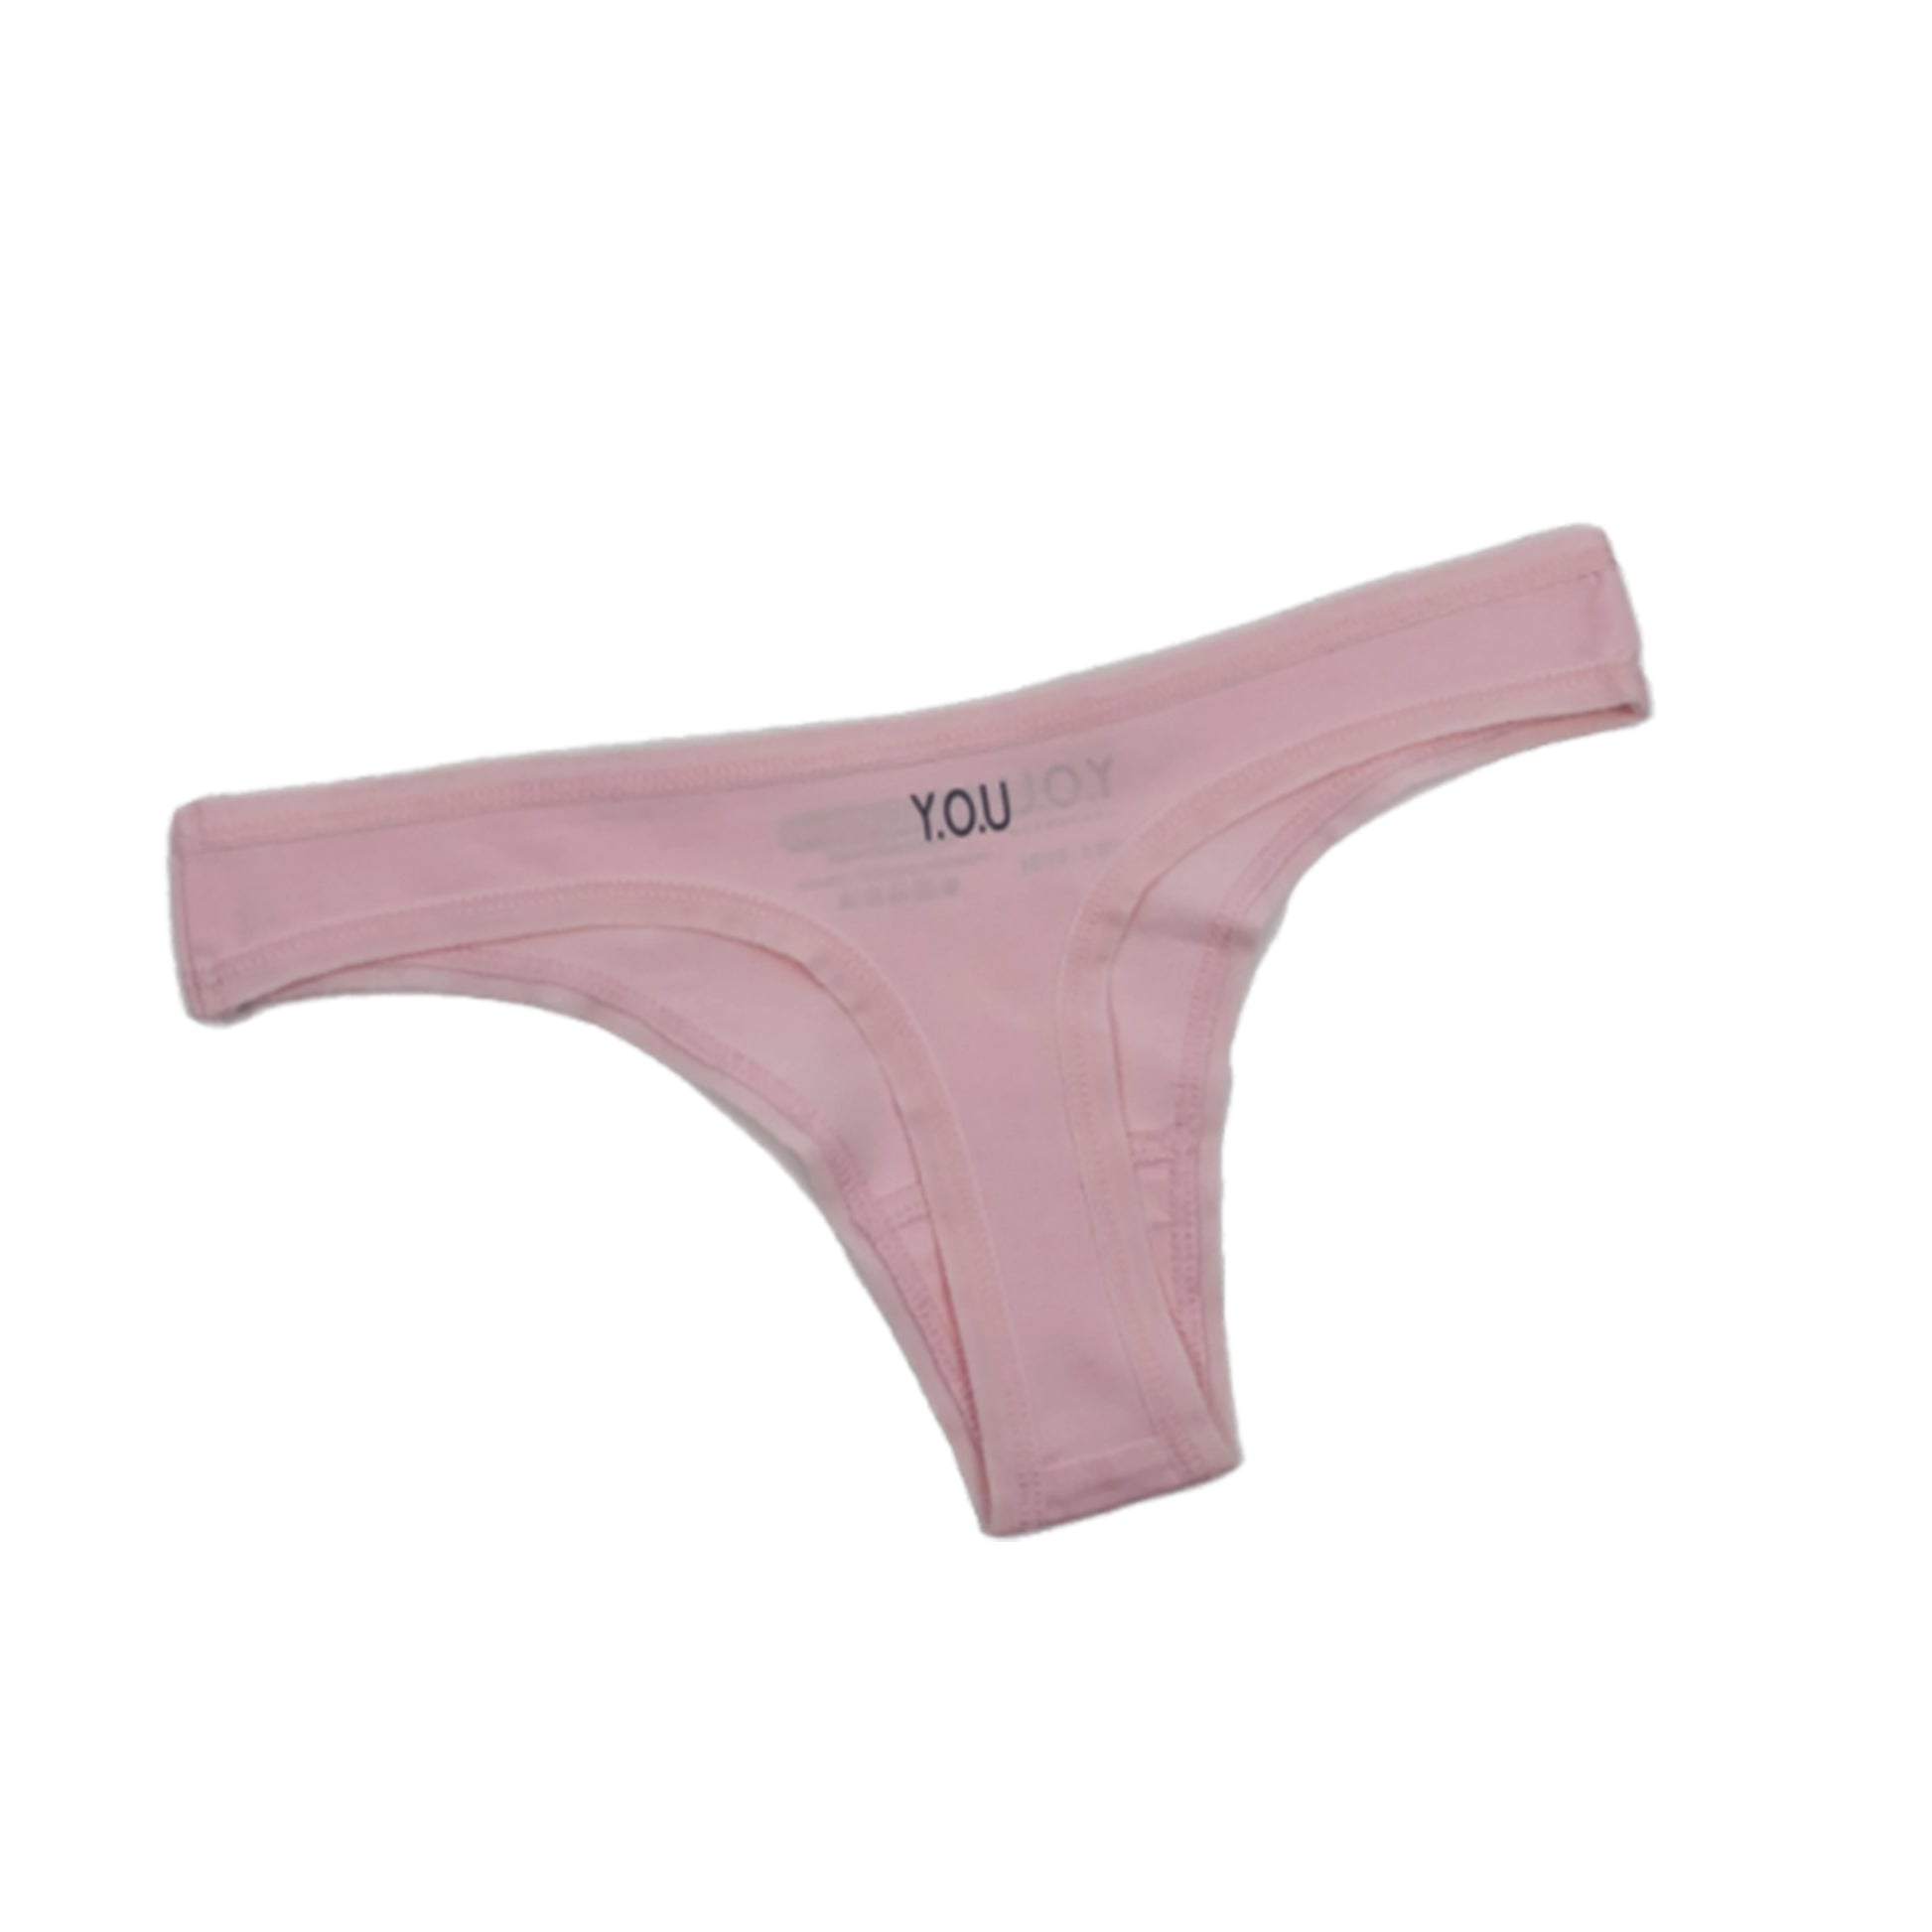 Women's Cotton Modal Thong Underwear in Light Pink size Medium